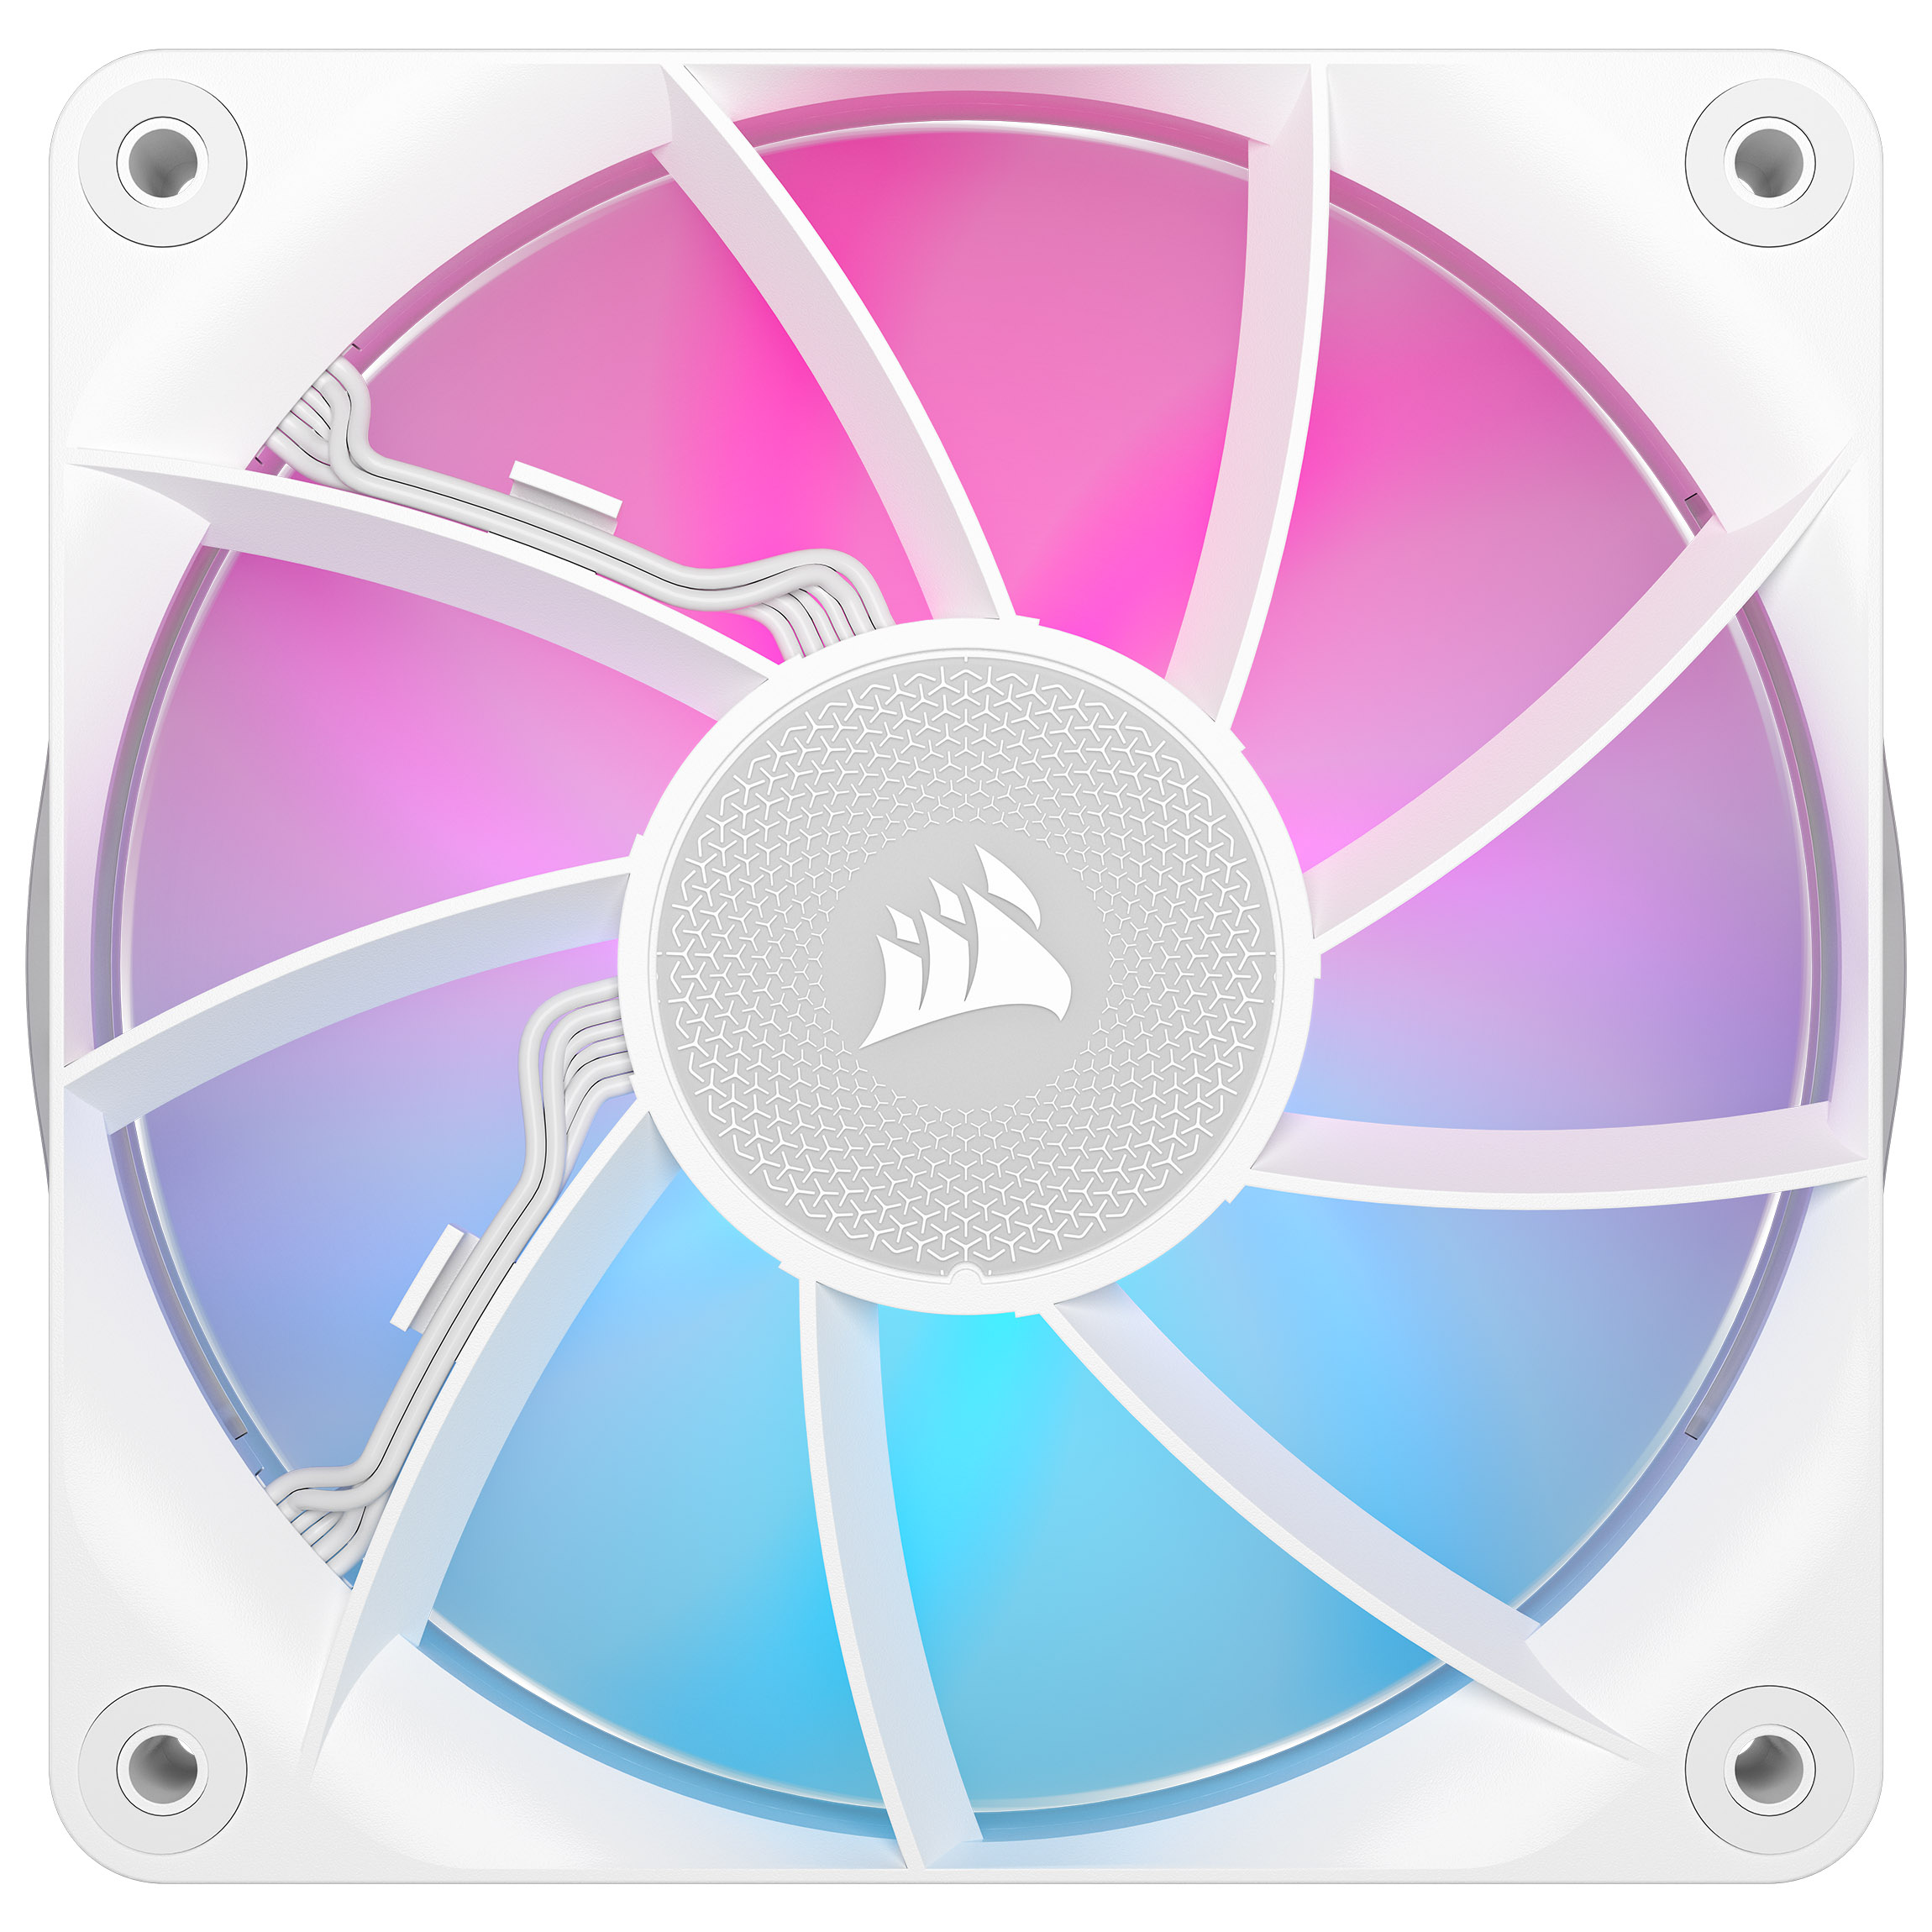 CORSAIR - CORSAIR iCUE LINK RX120 RGB 120mm PWM Fans Expansion Fan - White